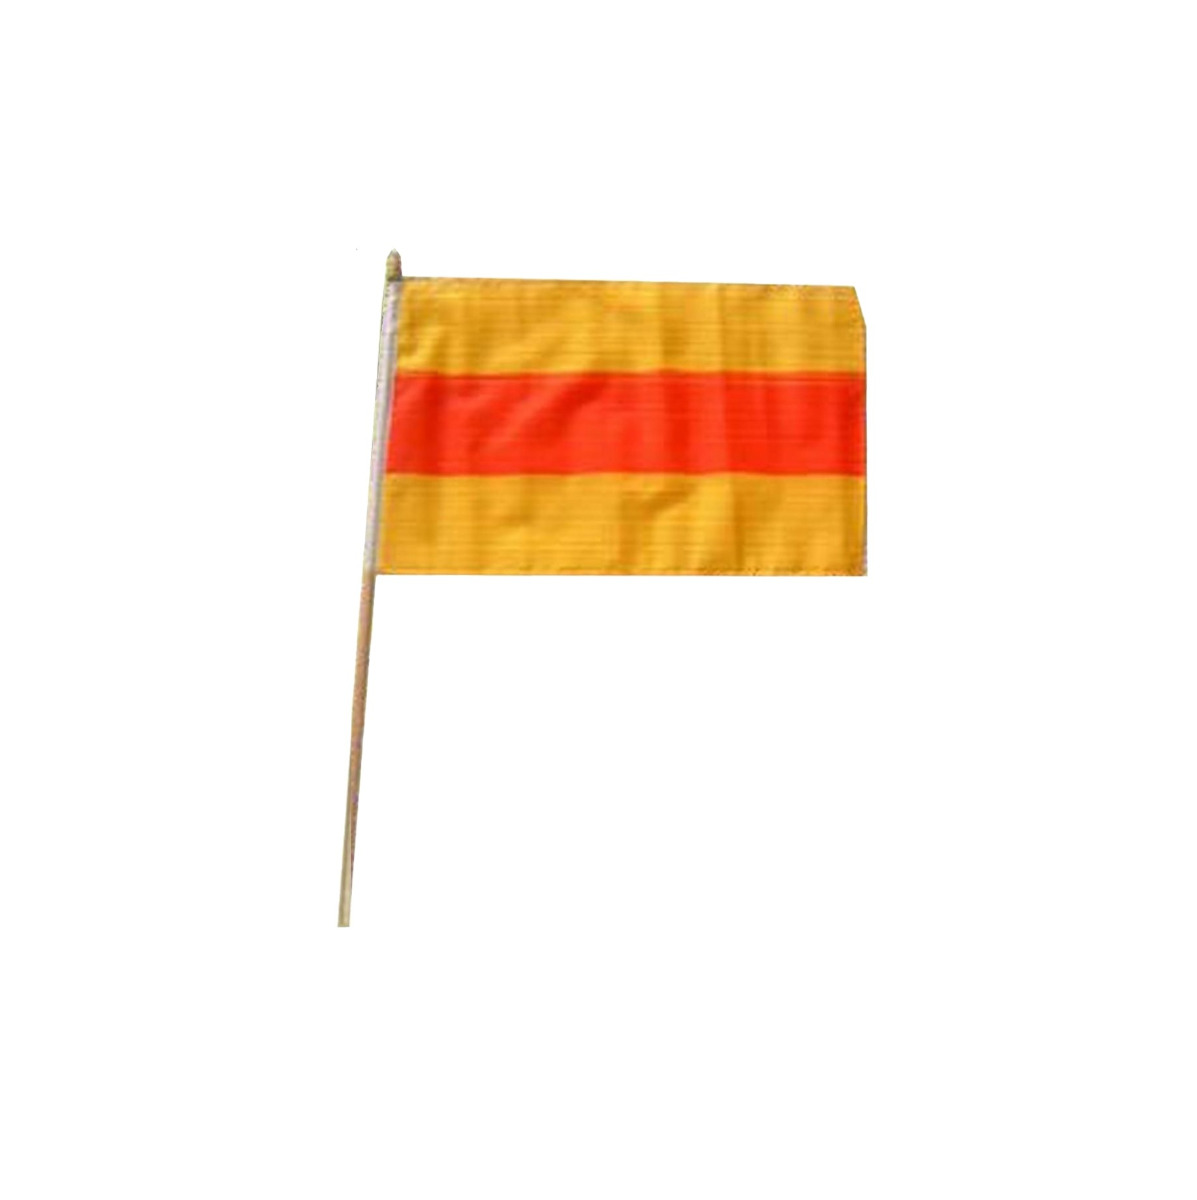 Stockflagge "Baden" (gelb-rot-gelb)  